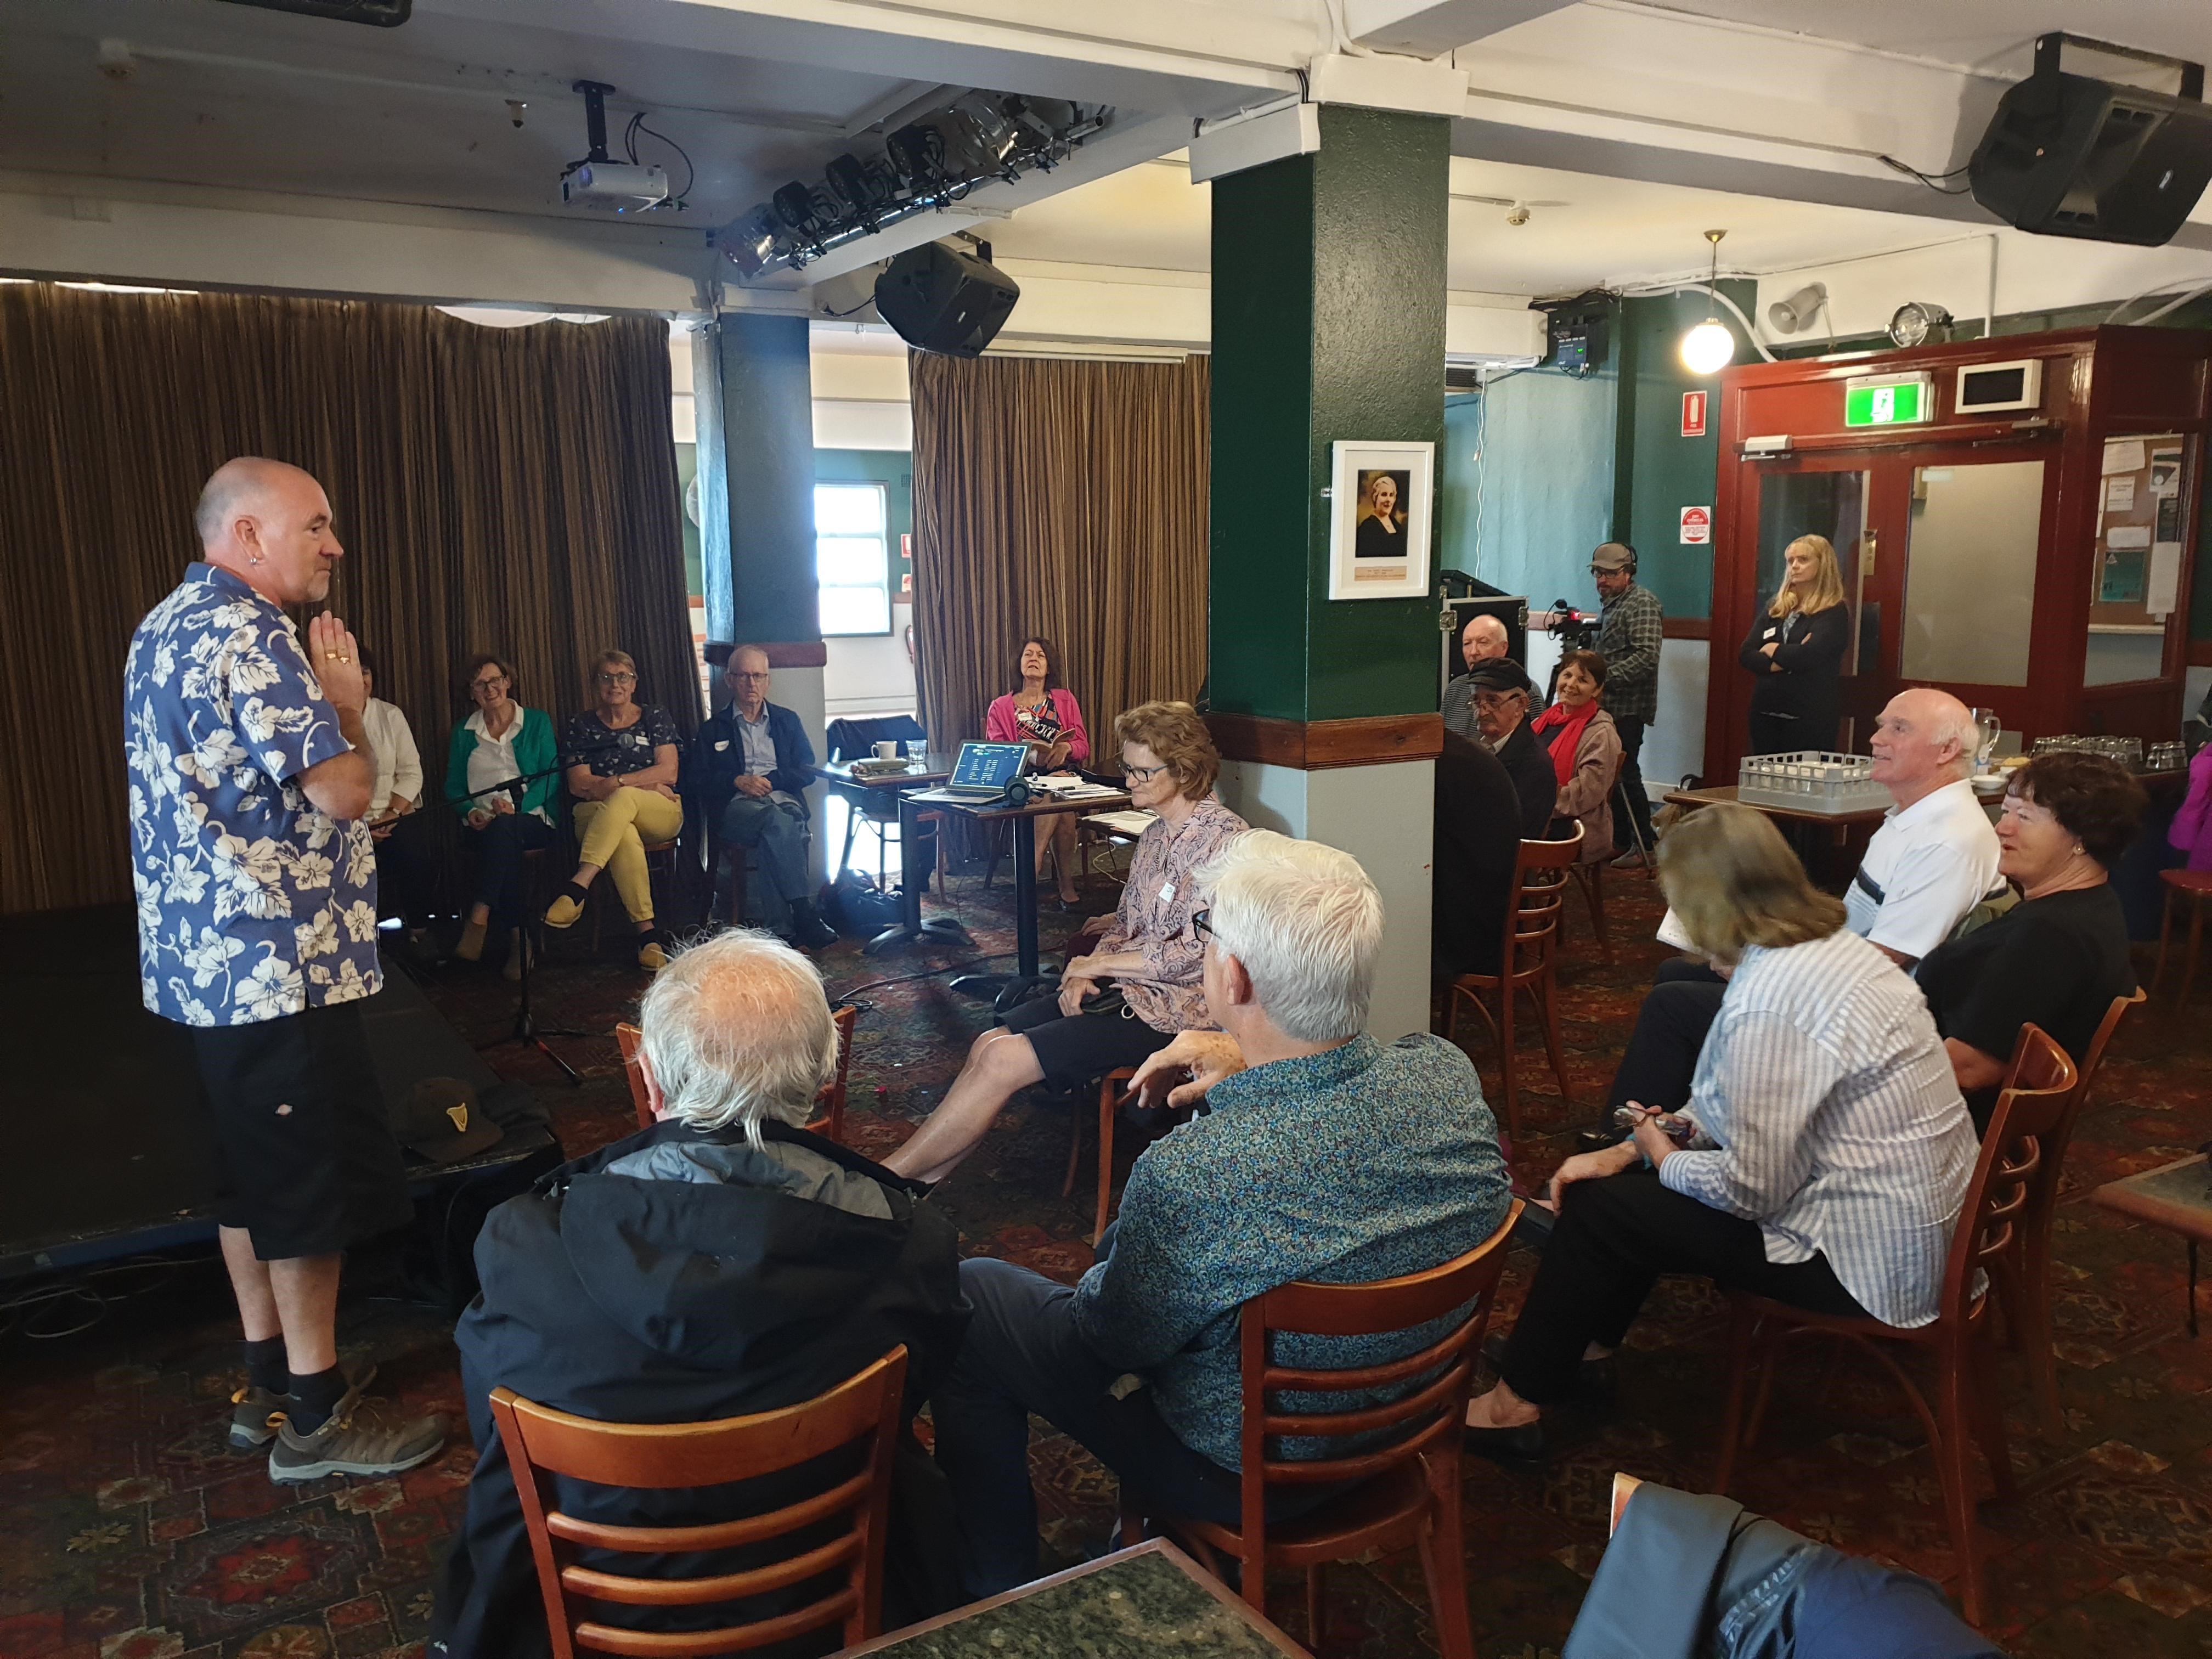 Australia: Seniors Music Sessions serve to connect and reunite